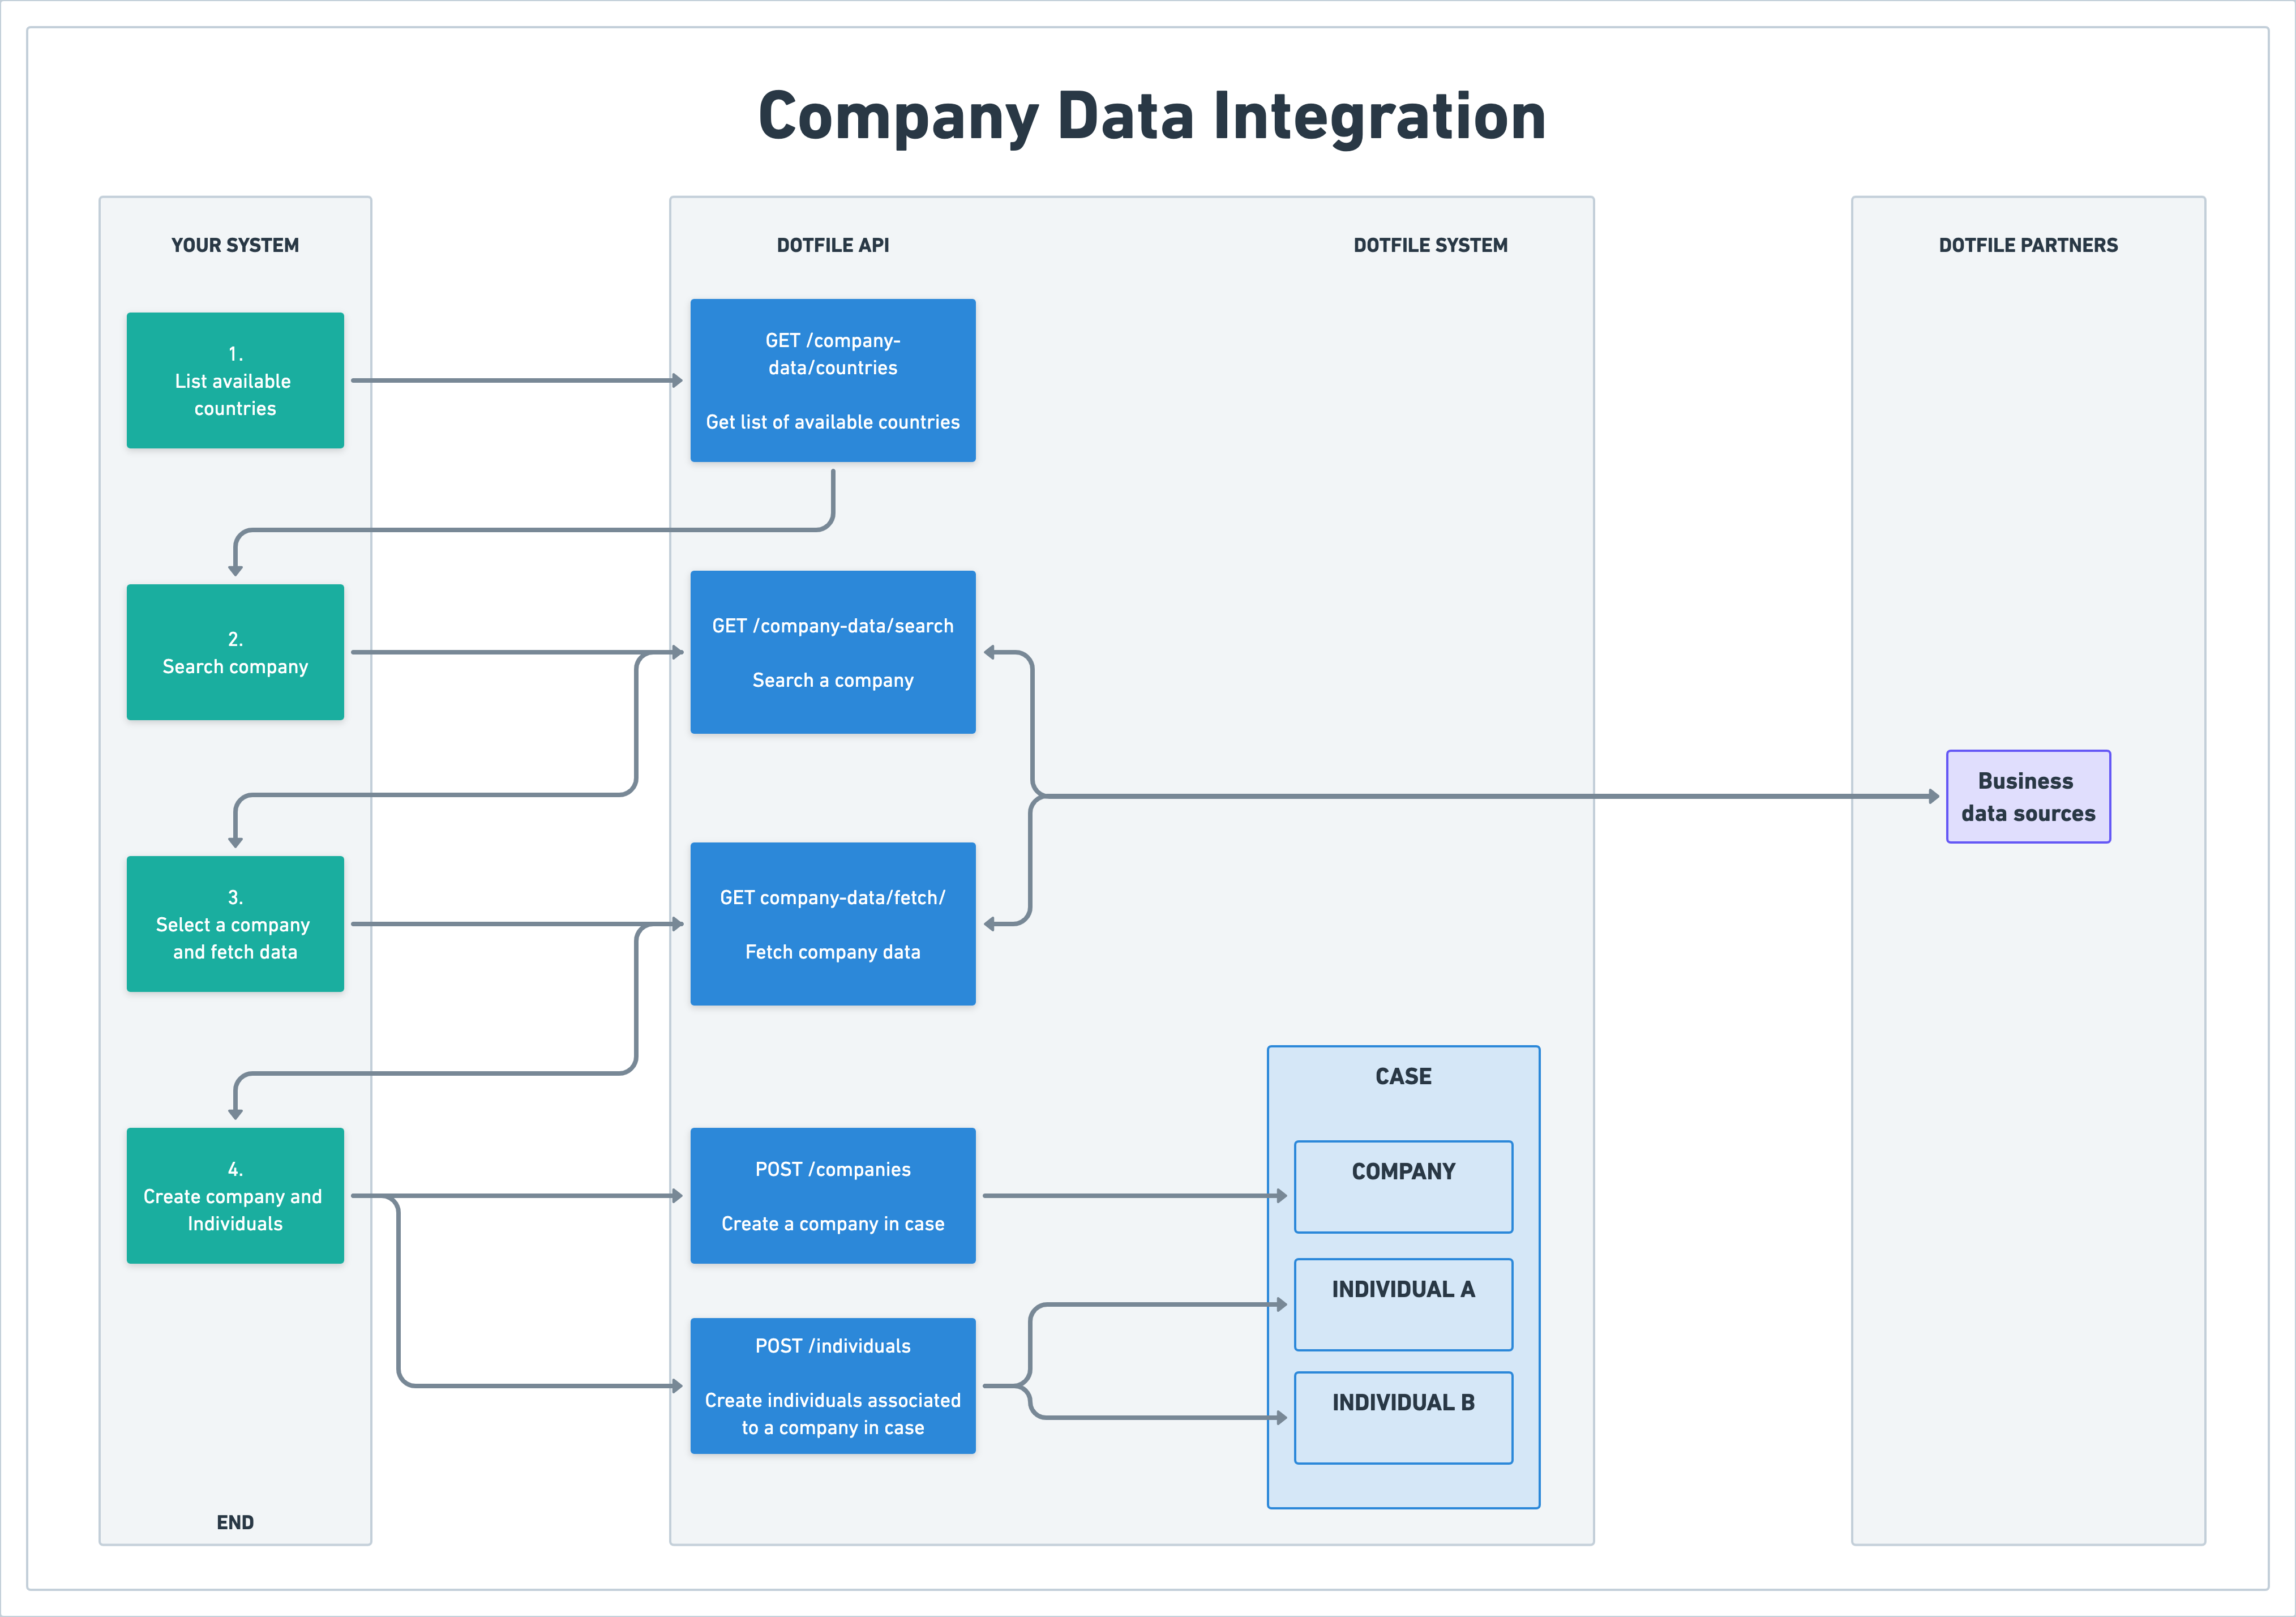 company data integration - Dotfile